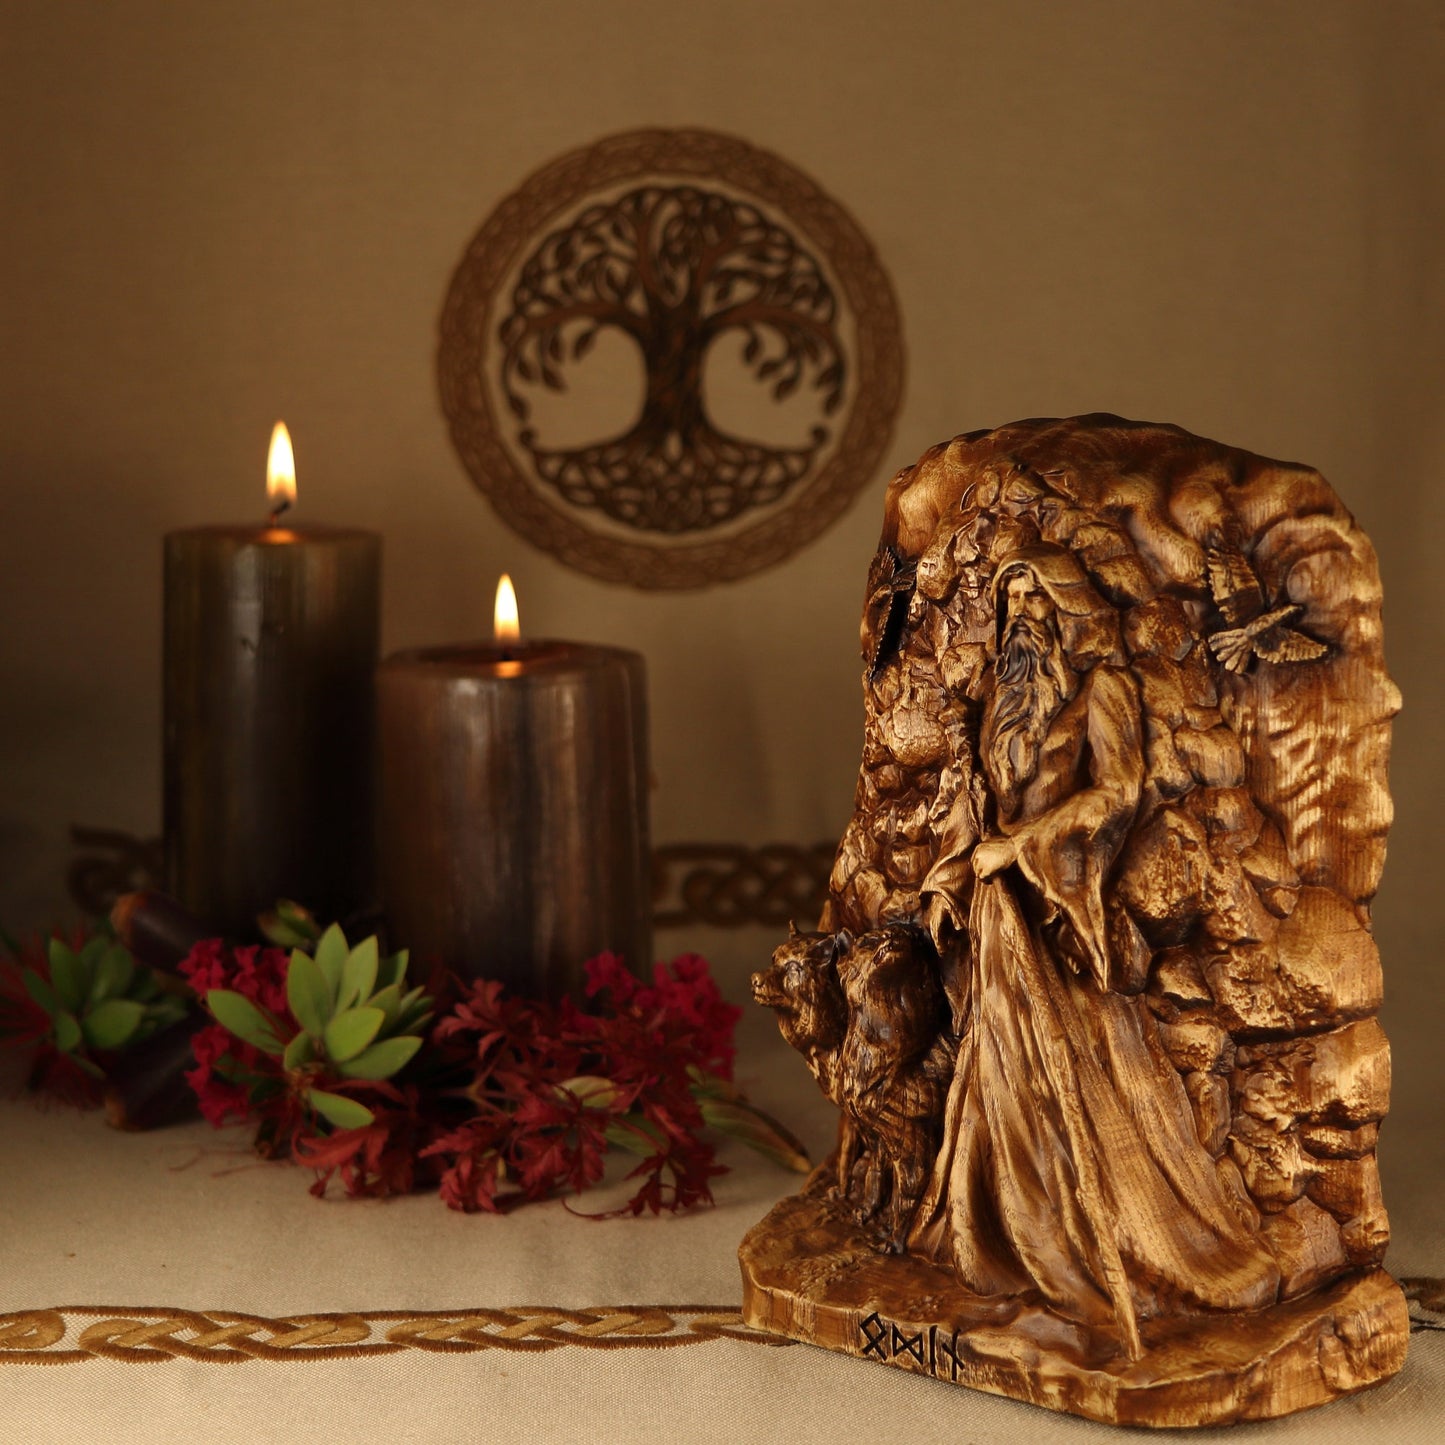 Odin statue, Norse gods statue Wood carving, wood sculpture art